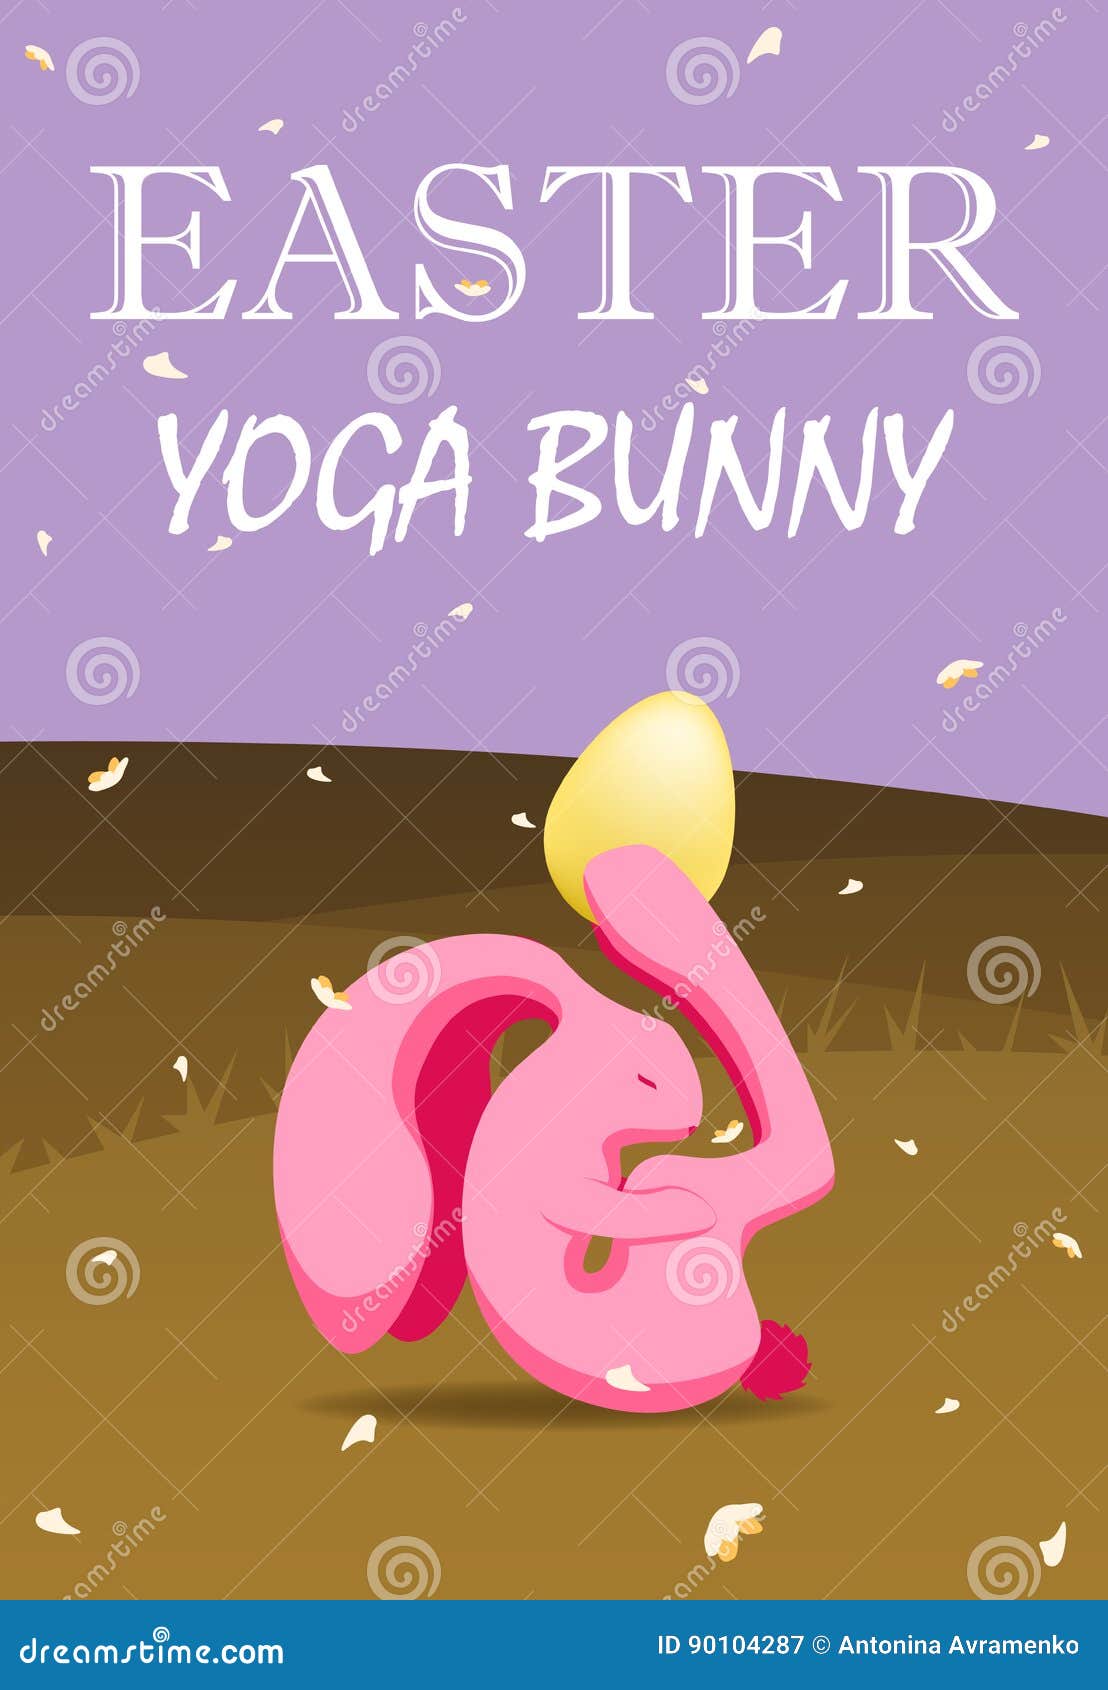 Easter yoga bunny. stock illustration. Illustration of funny - 90104287